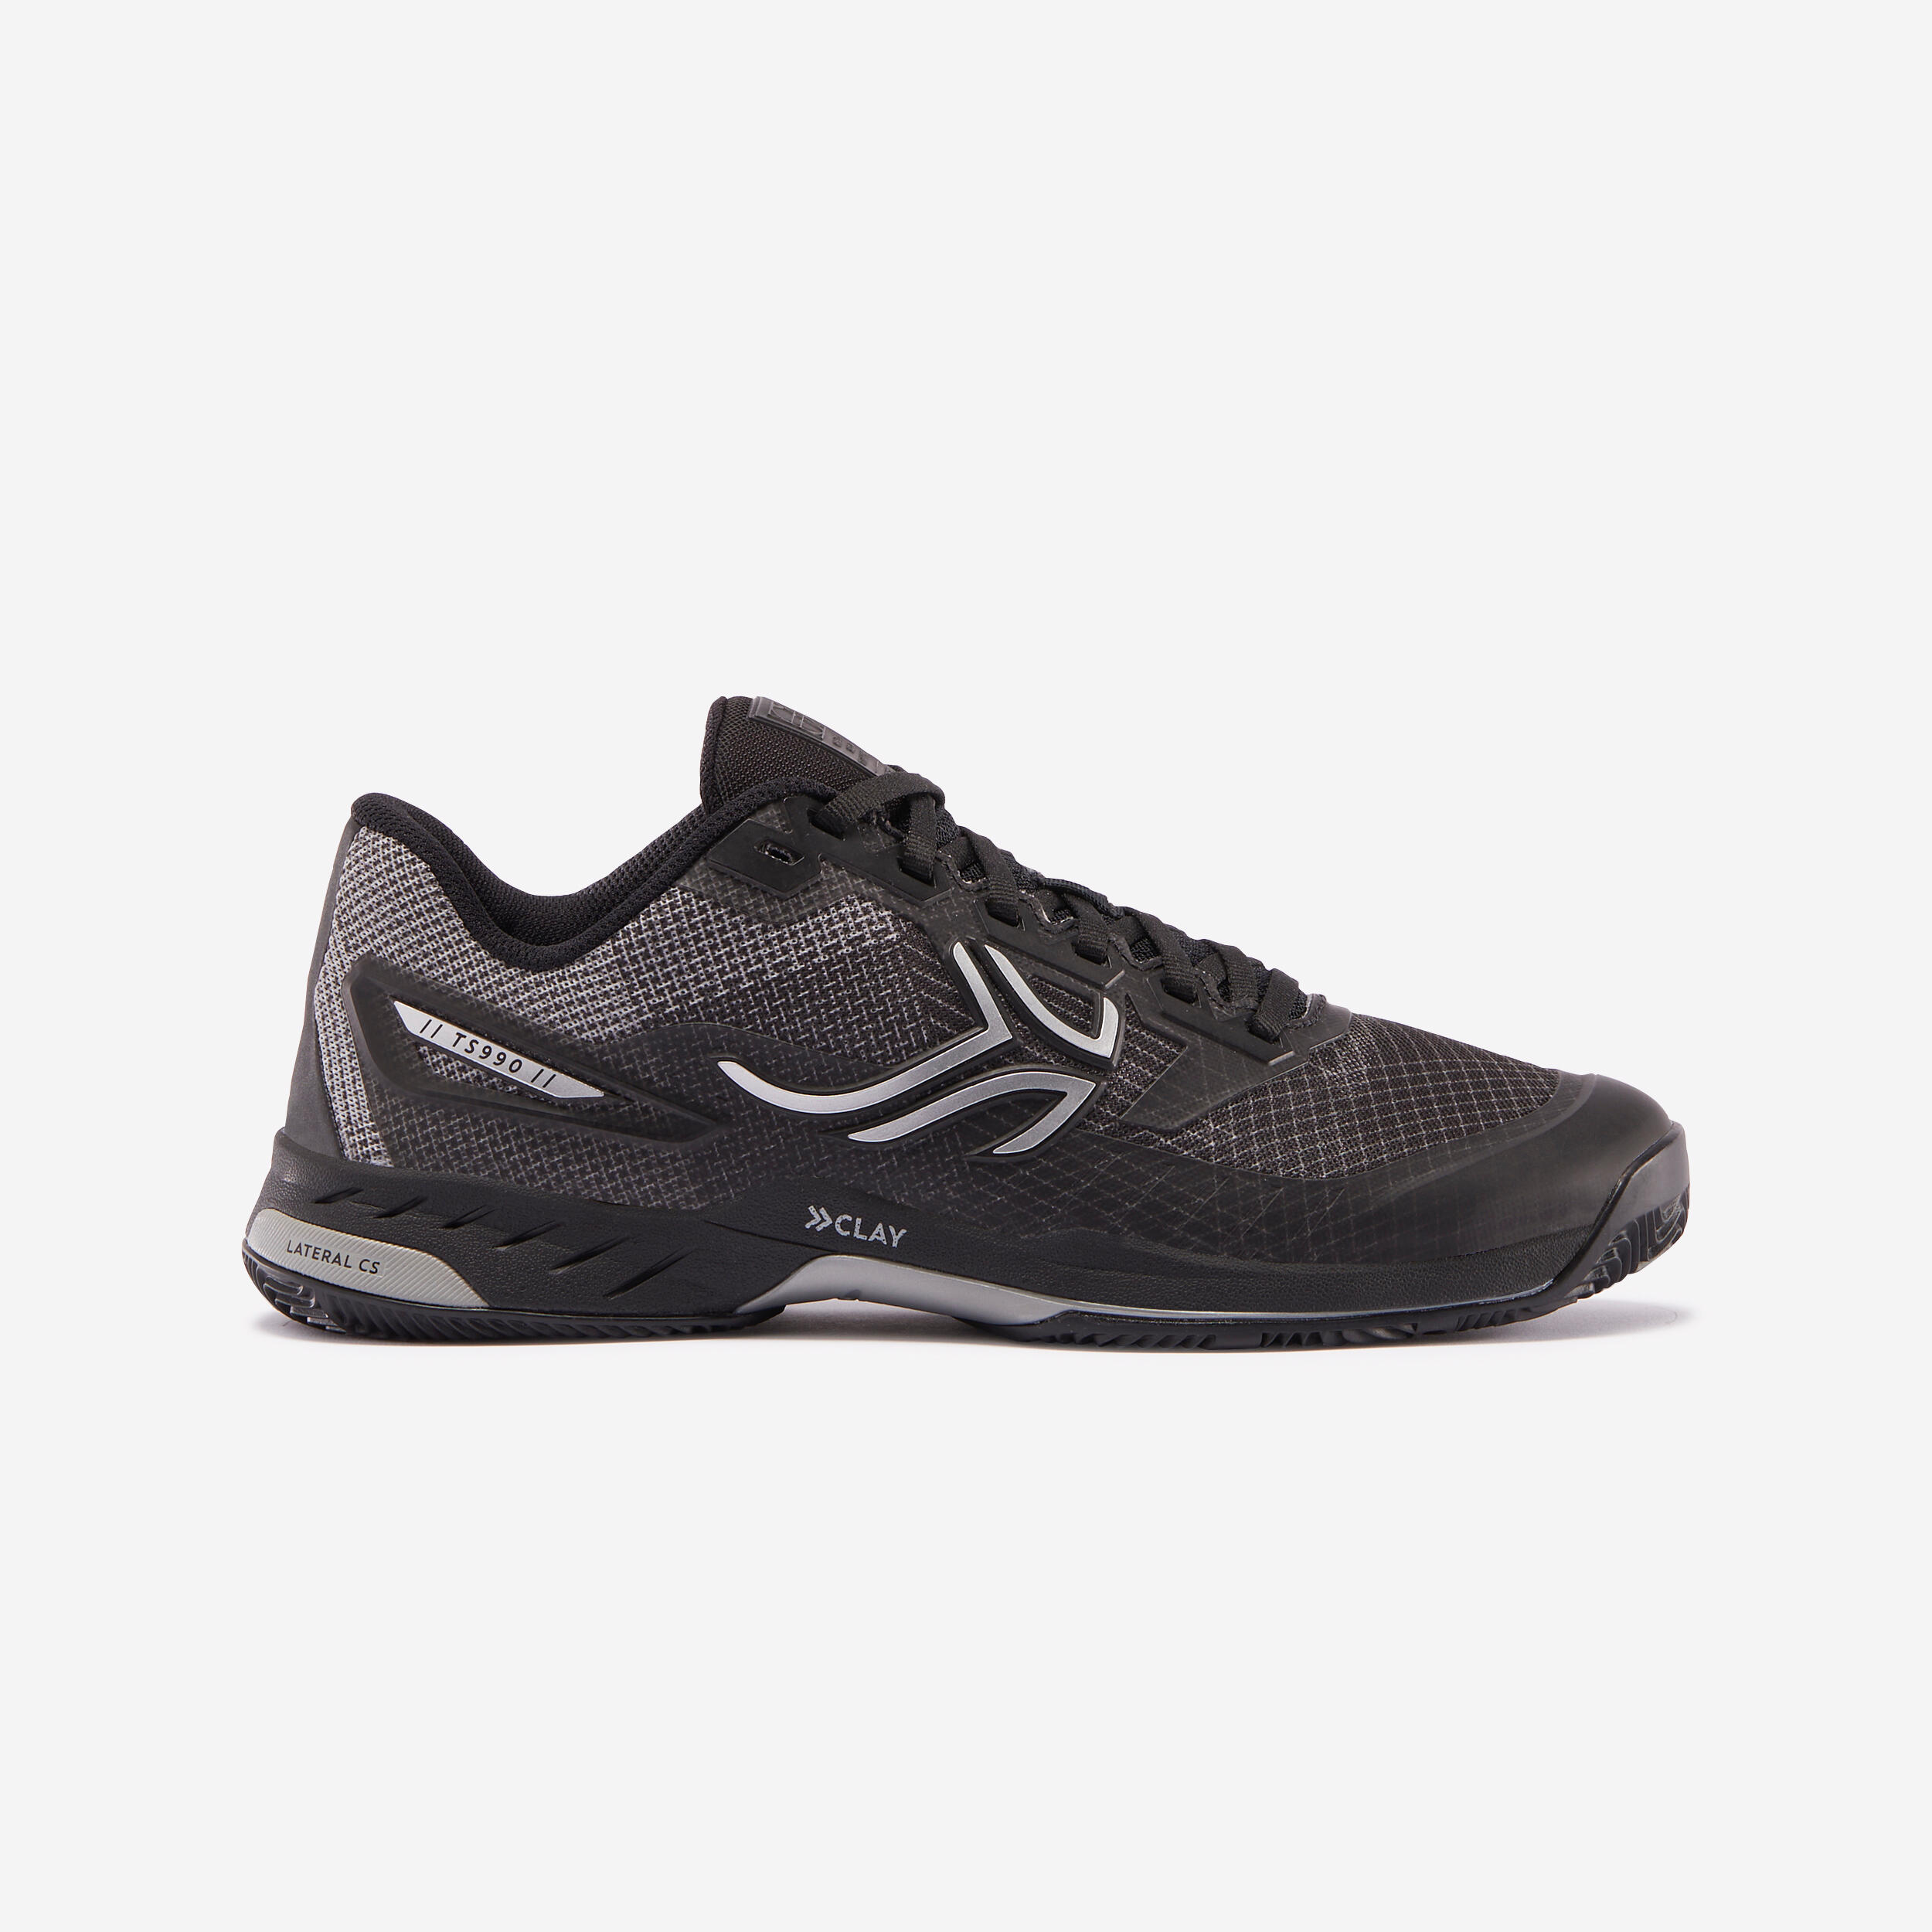 ARTENGO Men's Clay Court Tennis Shoes TS990 - Black